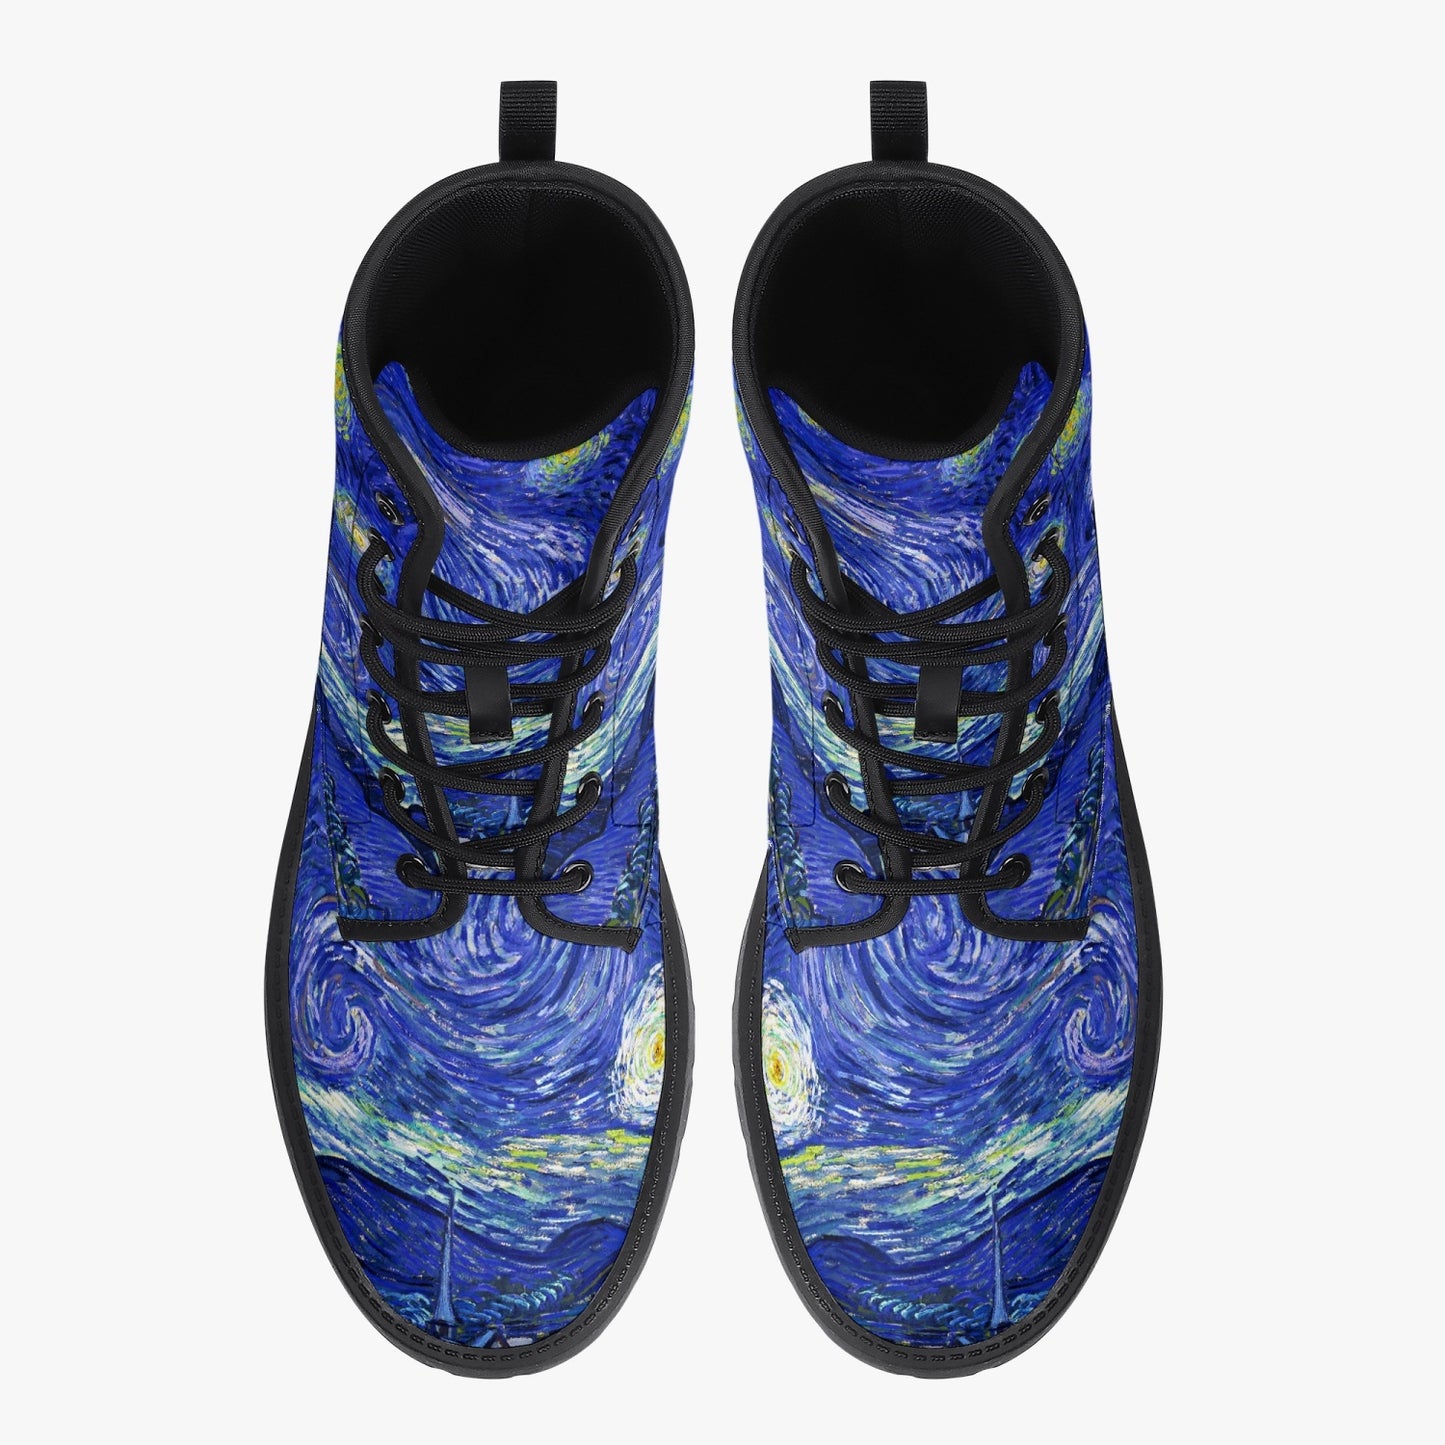 Van Gogh Starry Night Vegan Leather Combat Boots (JPREGVGS)